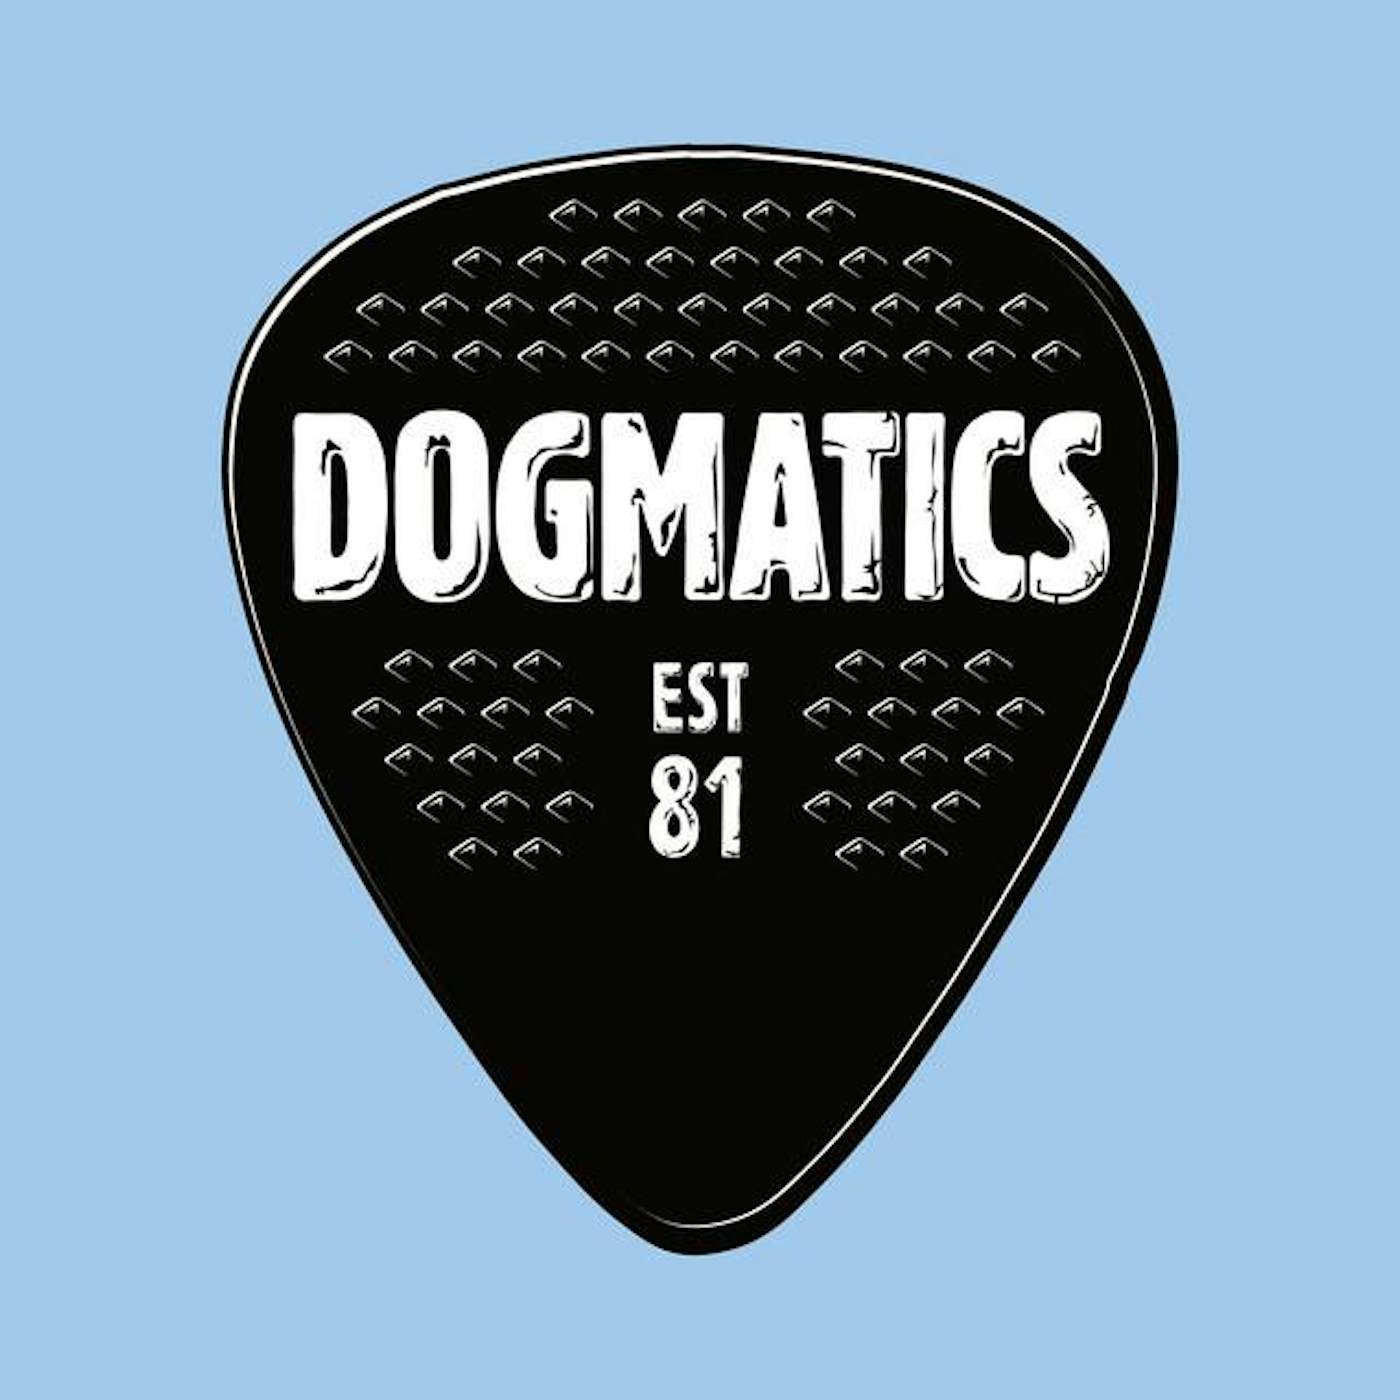 The Dogmatics